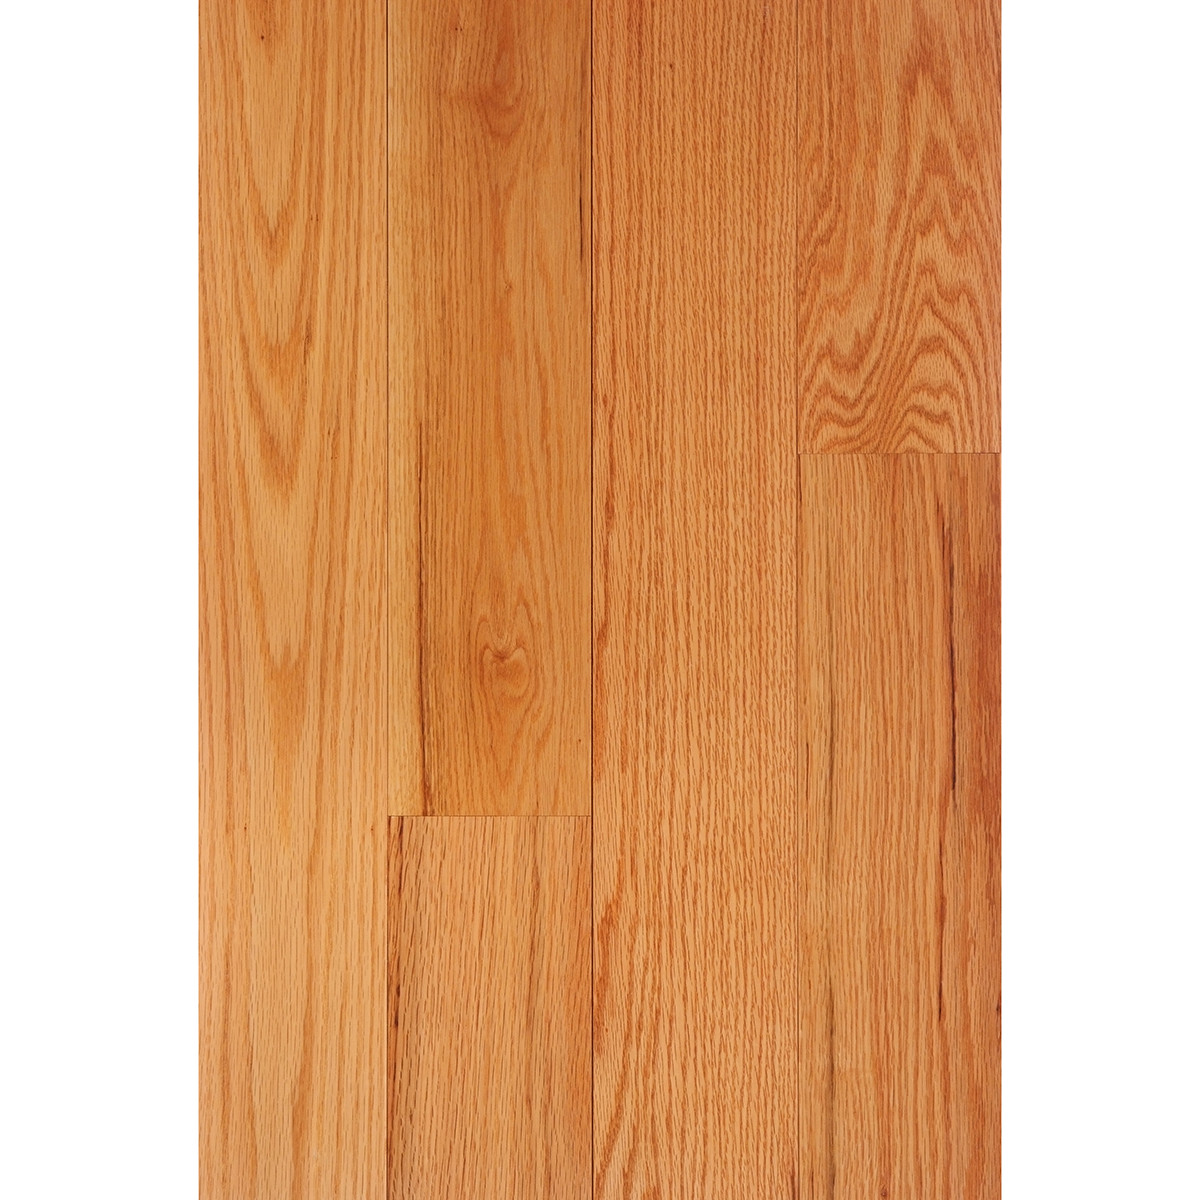 21 Unique 3 4 Inch Maple Hardwood Flooring 2024 free download 3 4 inch maple hardwood flooring of red oak 3 4 x 5 select grade flooring inside prefinished clear semi gloss 3 4